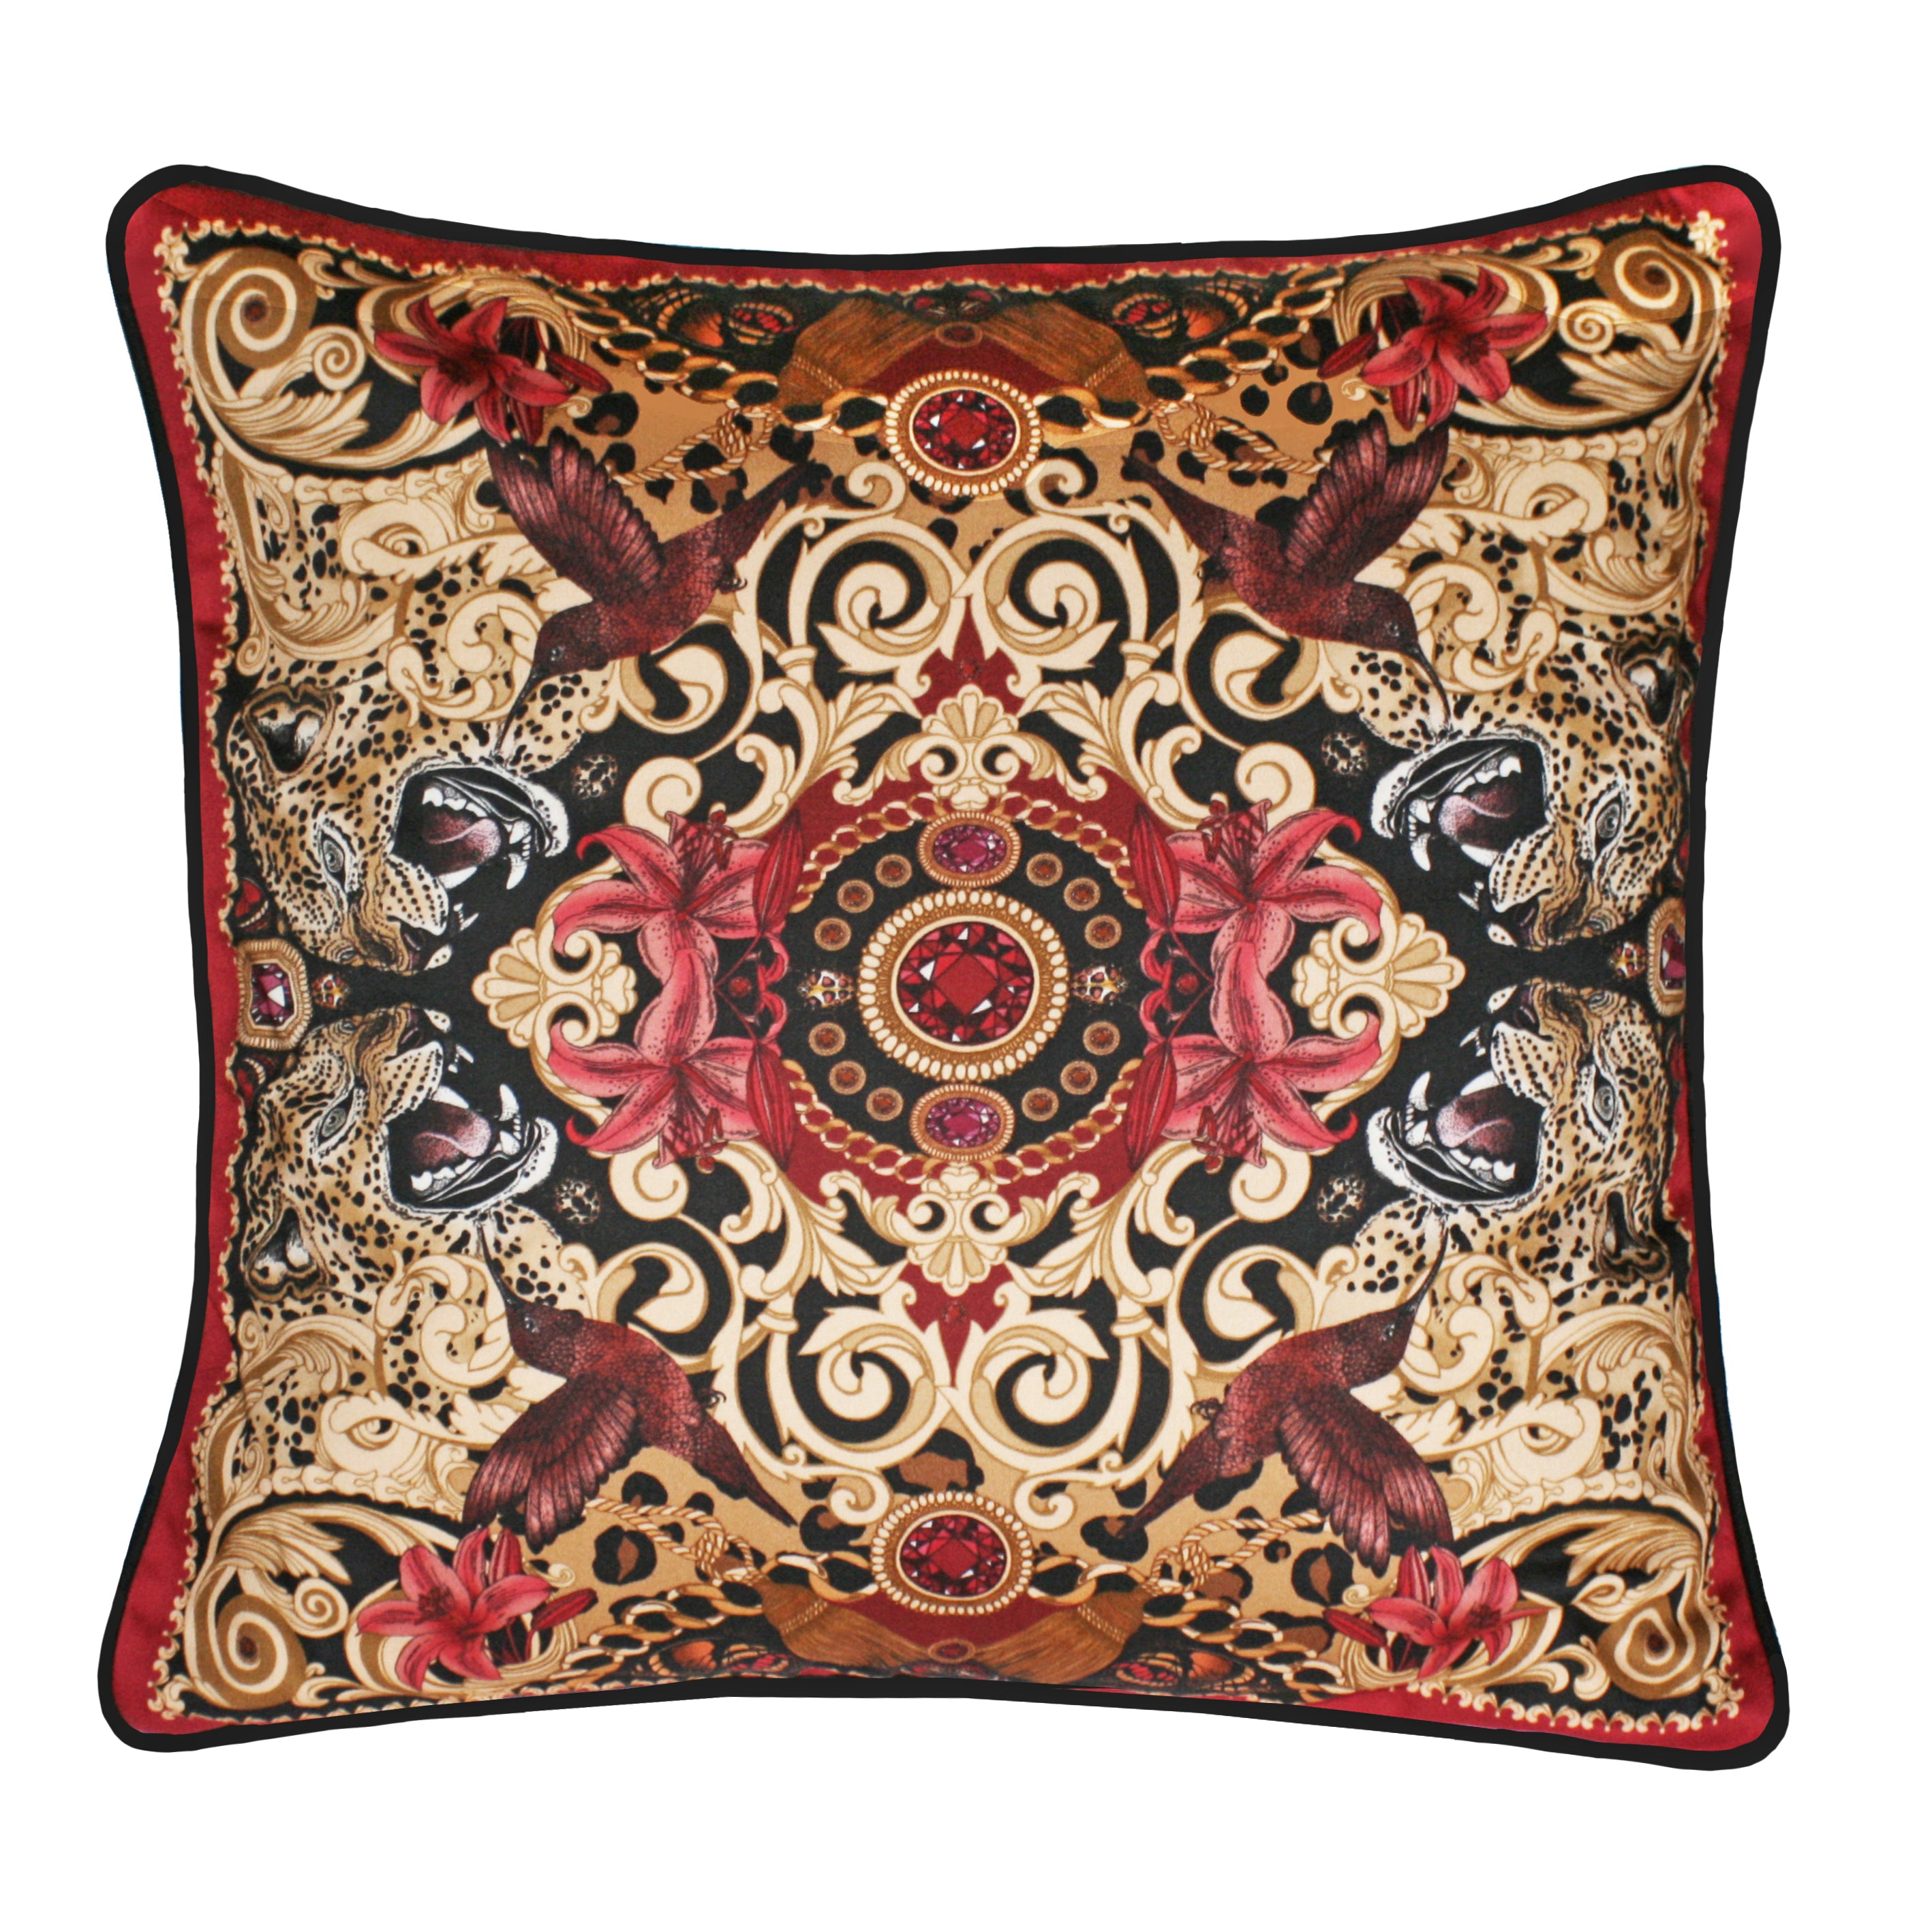 The Leopard & Ruby Cushion | 45x45cm